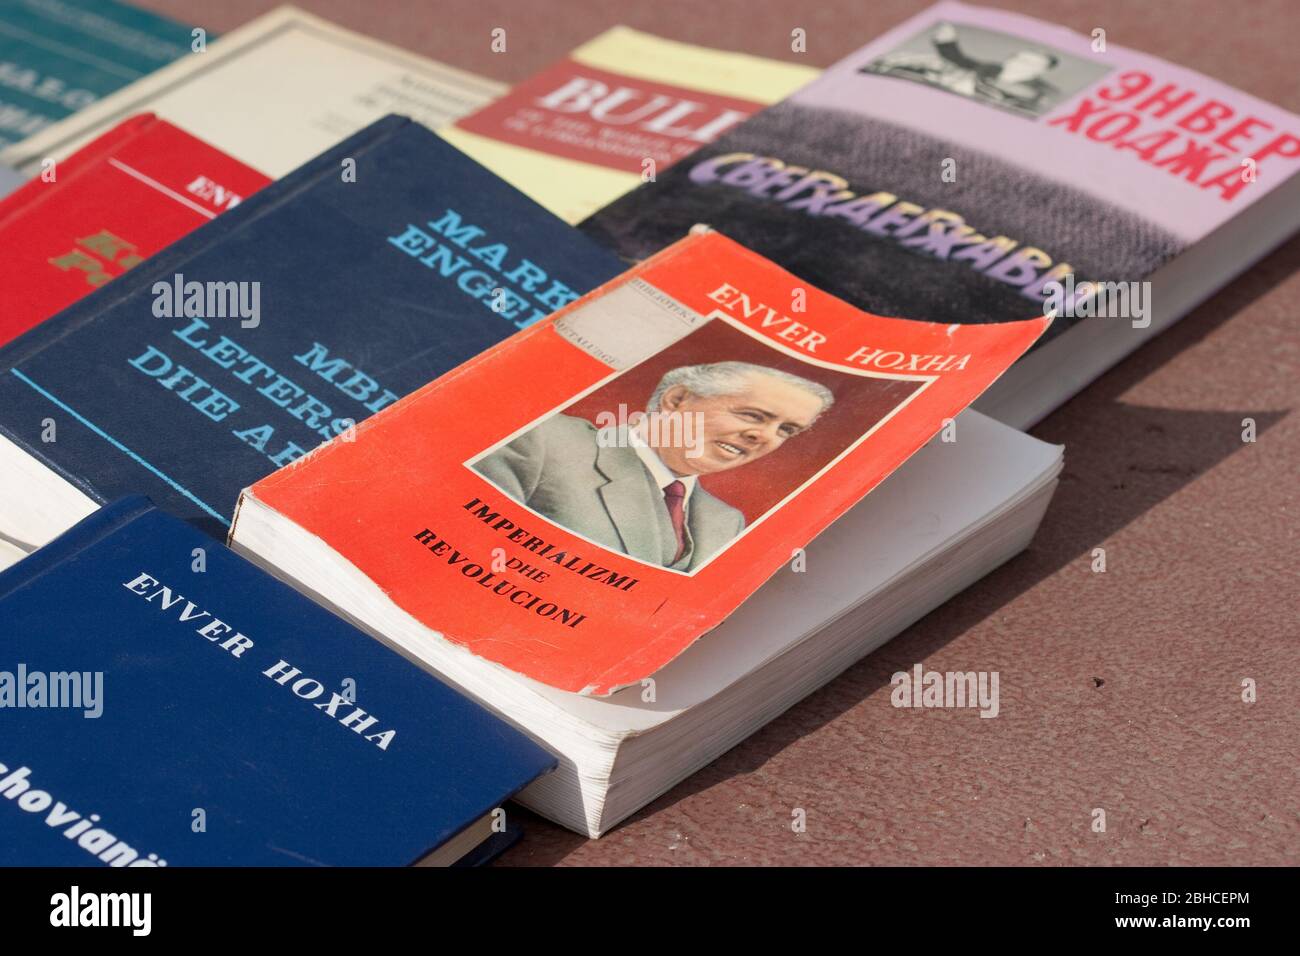 Books of Enver Hoxha at a flea market in Albania Stock Photo